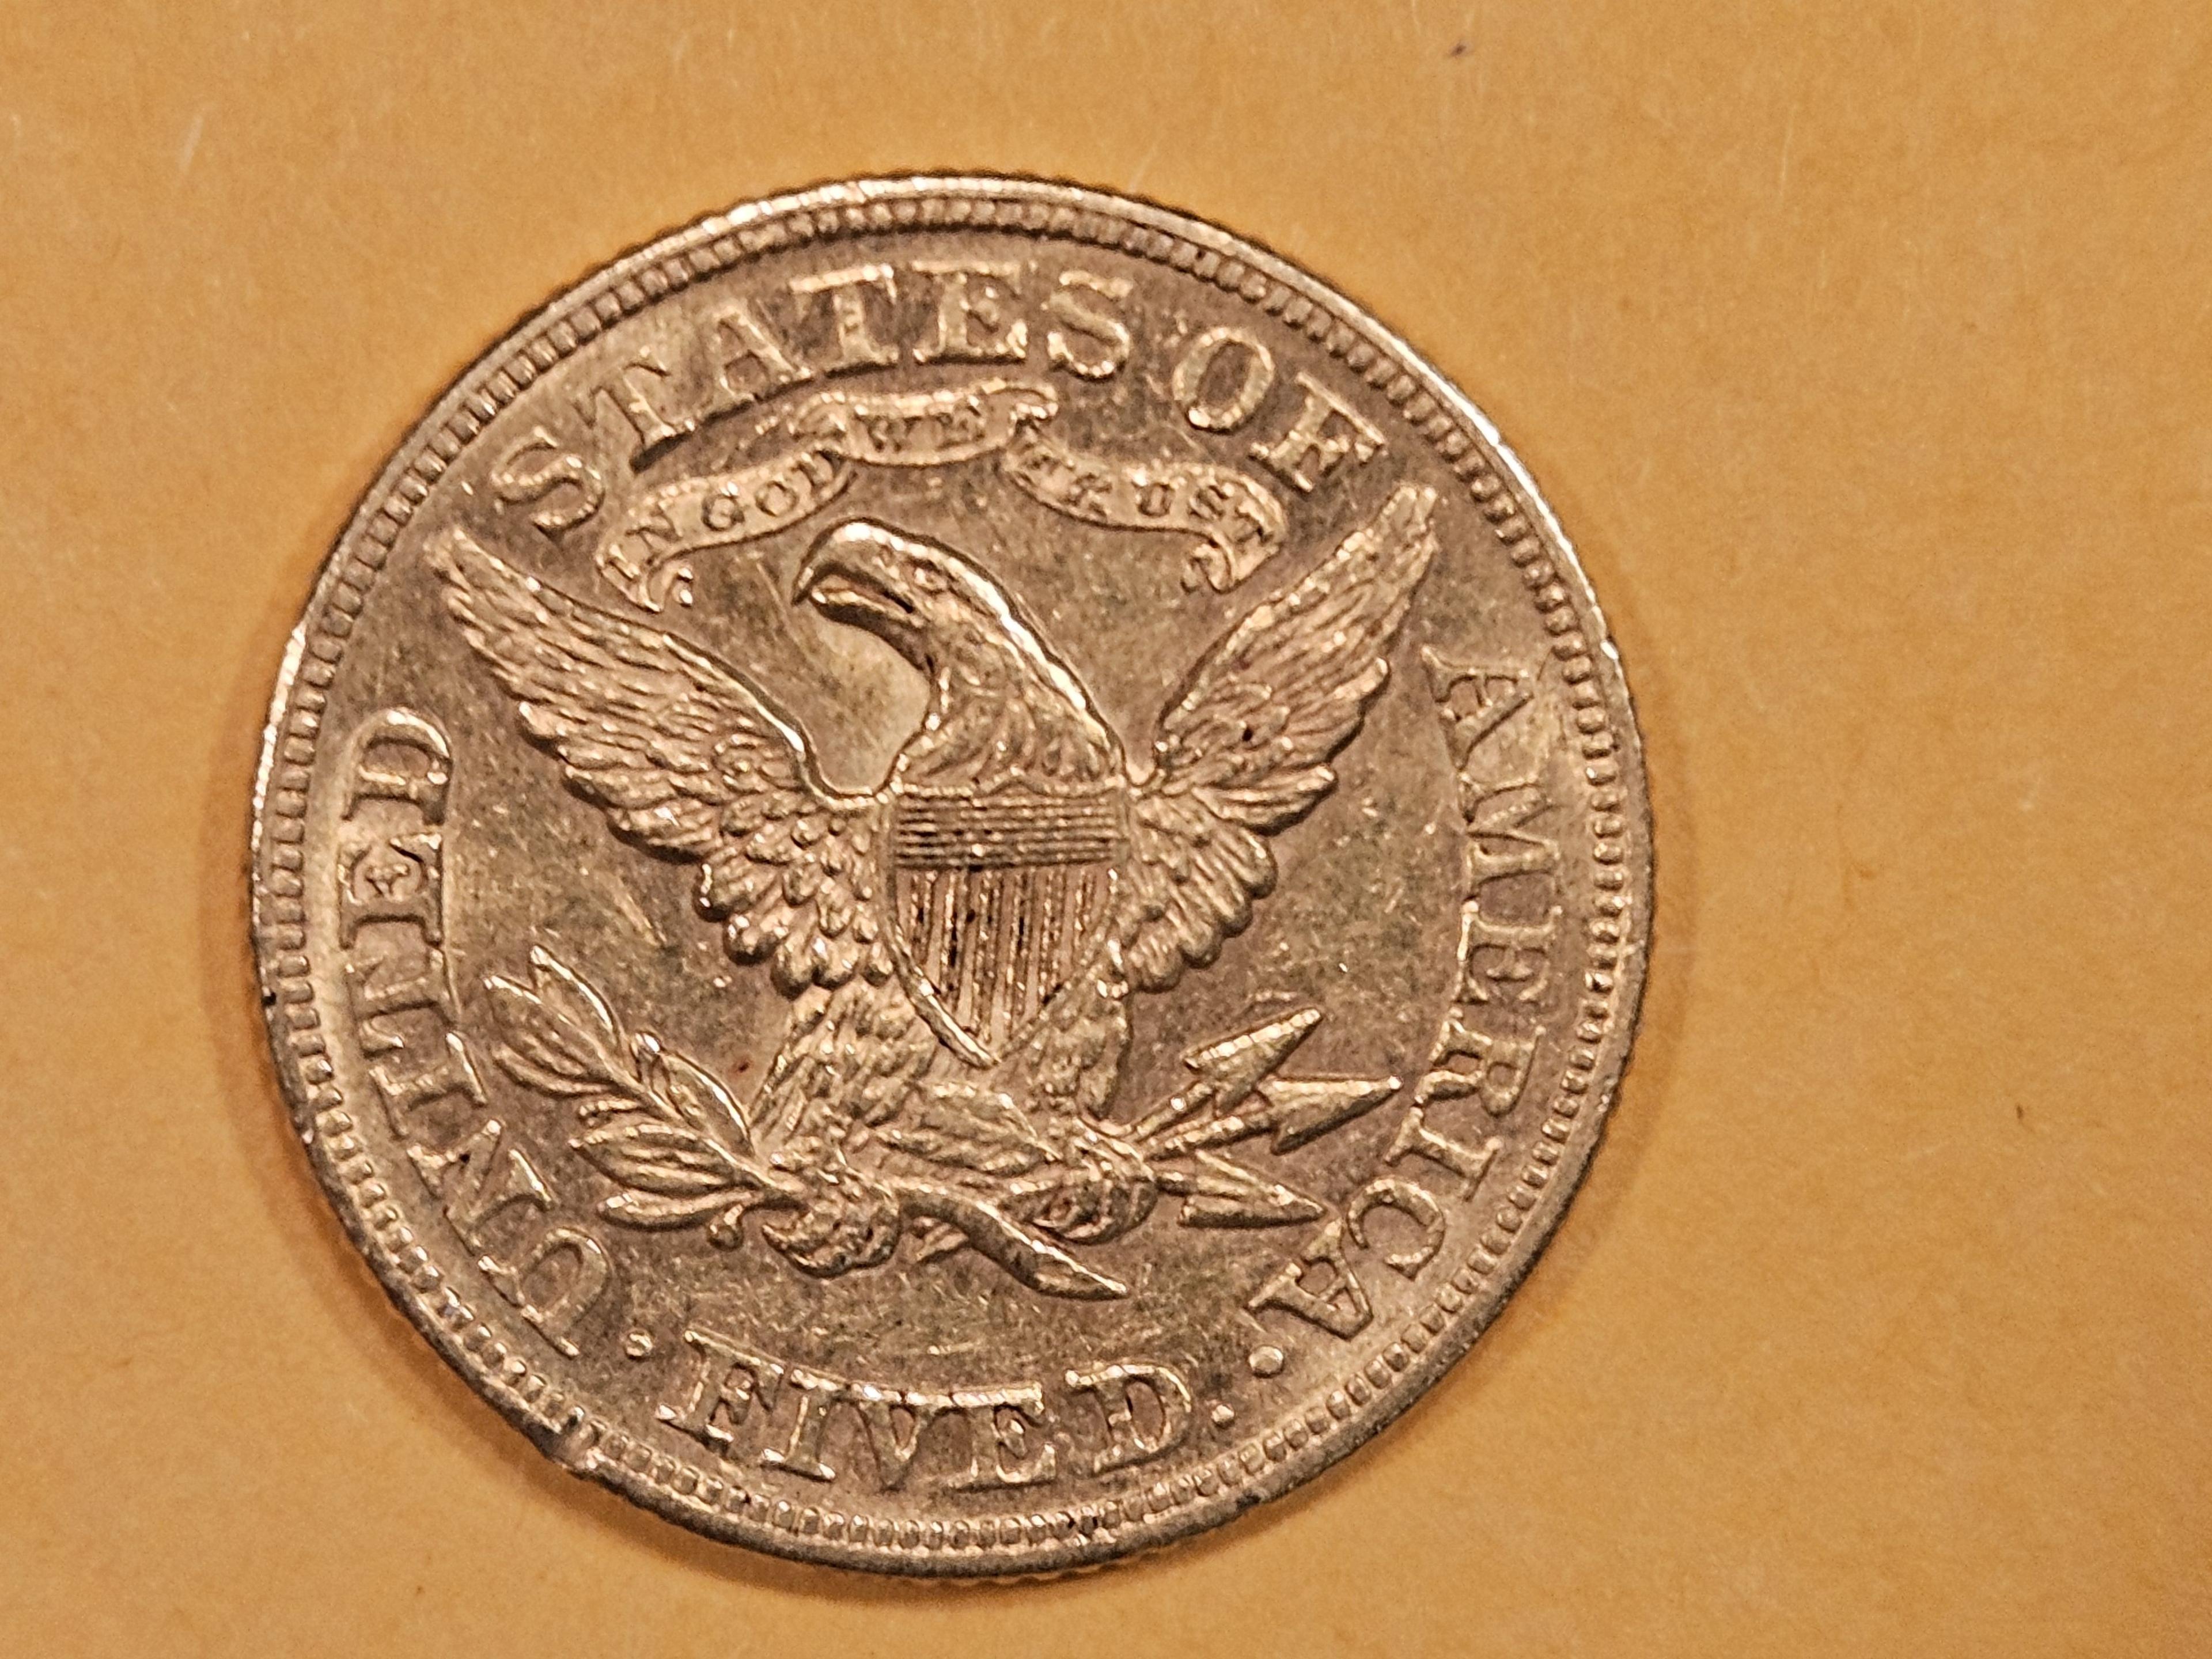 GOLD! Brilliant Uncirculated 1879 Liberty Head Gold $5 Half-Eagle